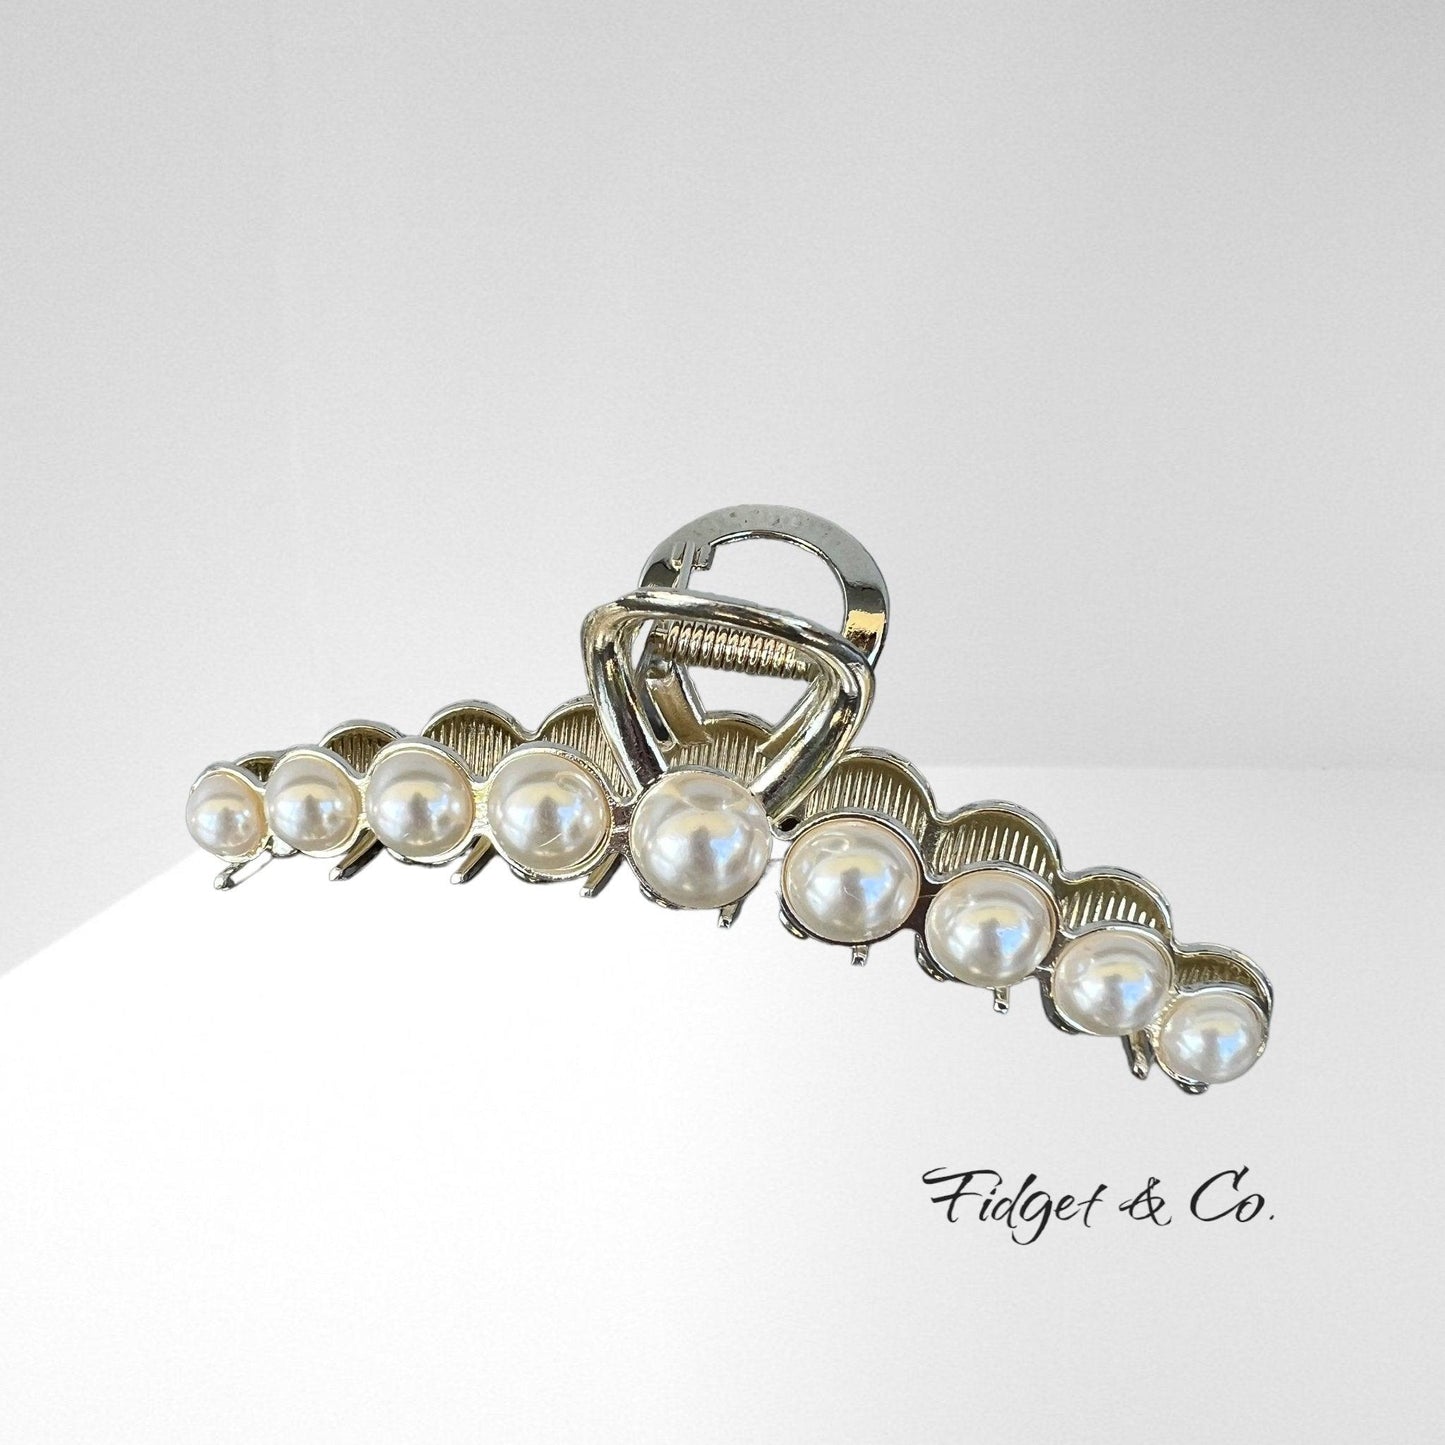 Metal Lux Claw Clips - Fidget & Co.